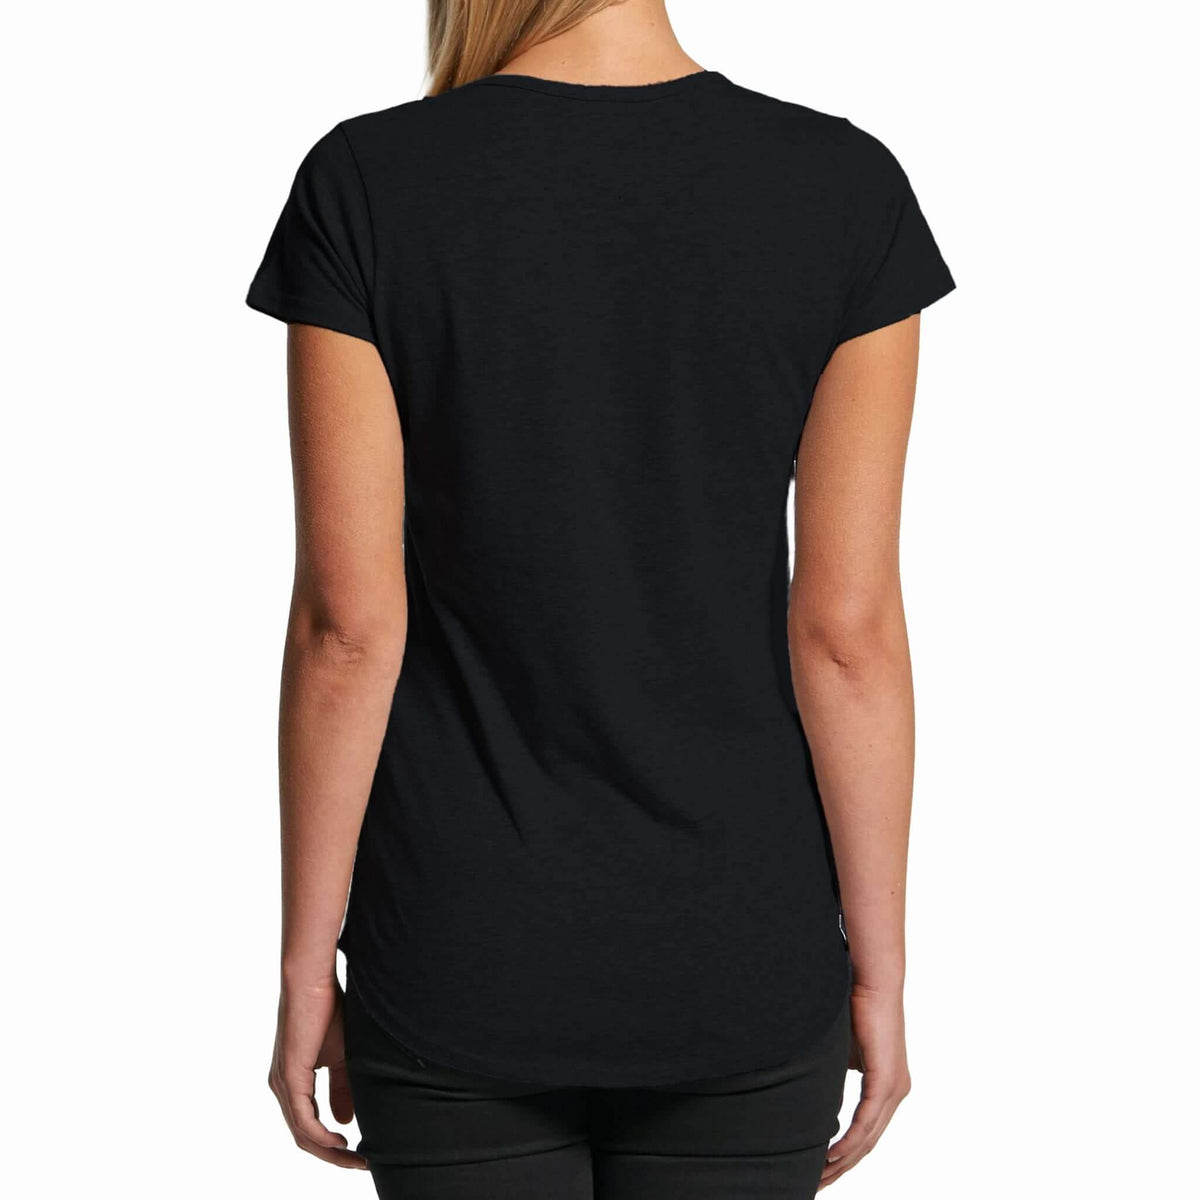 back view of woman wearing black t shirt